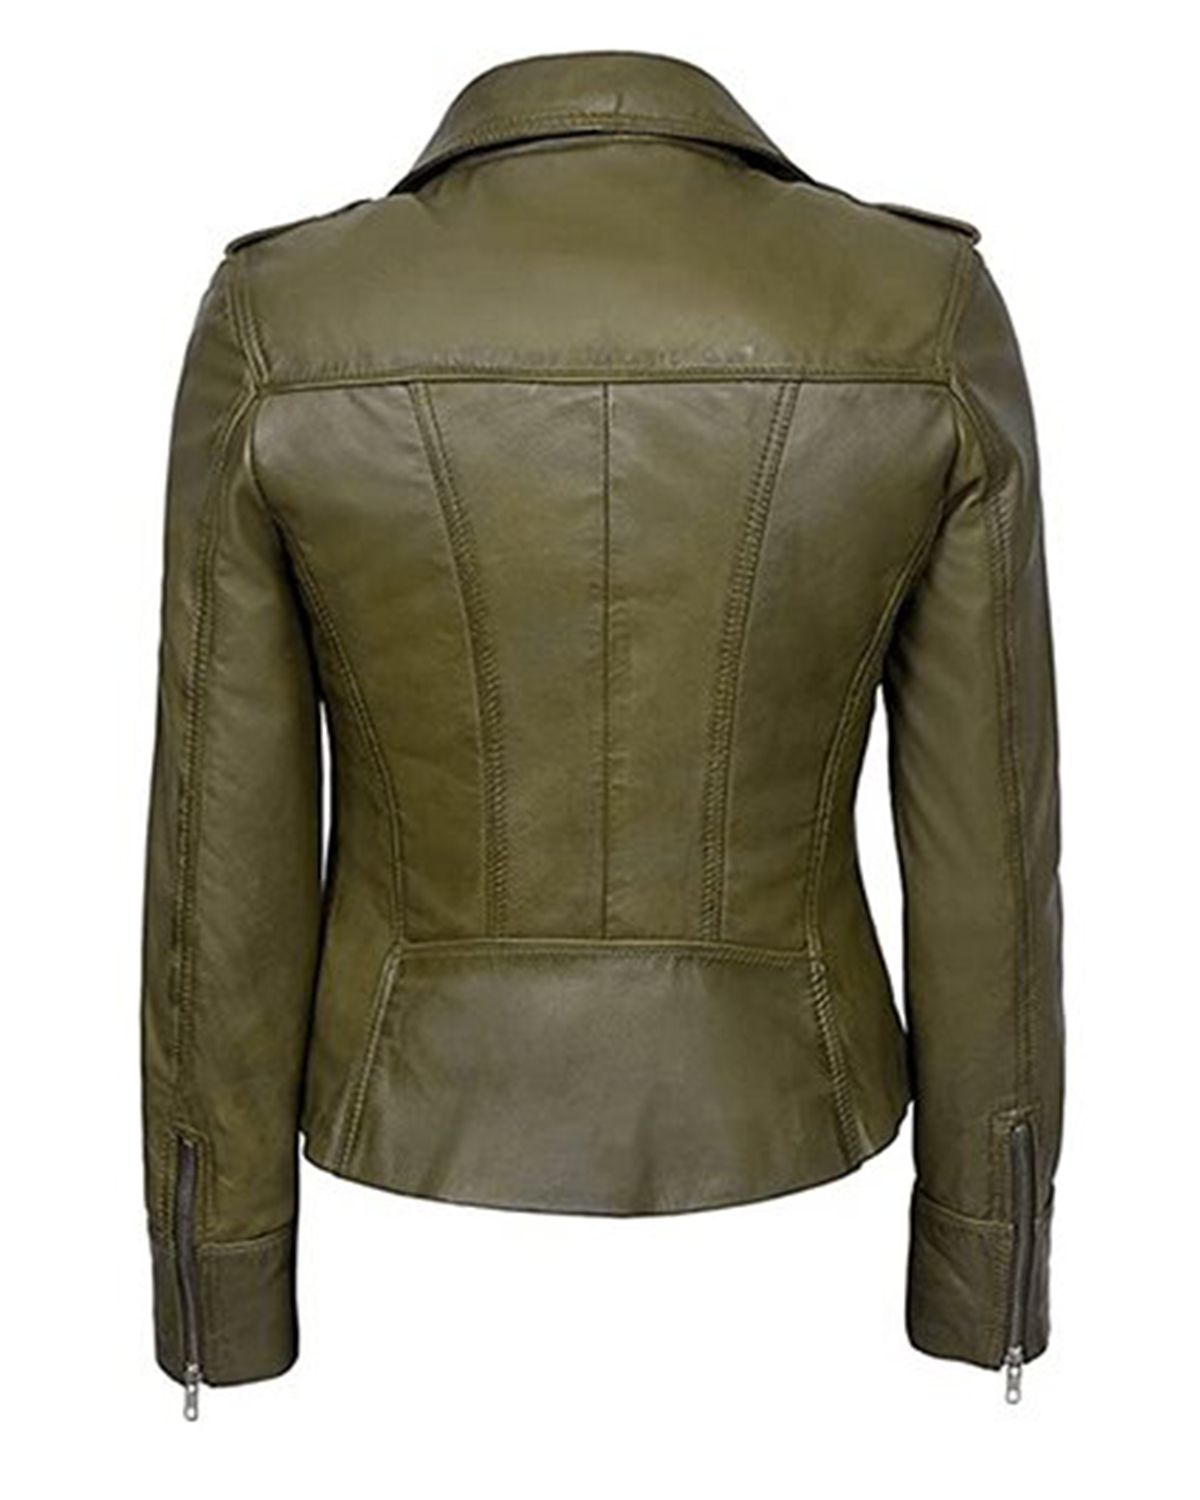 Women's Classic Olive Green Biker Leather Jacket